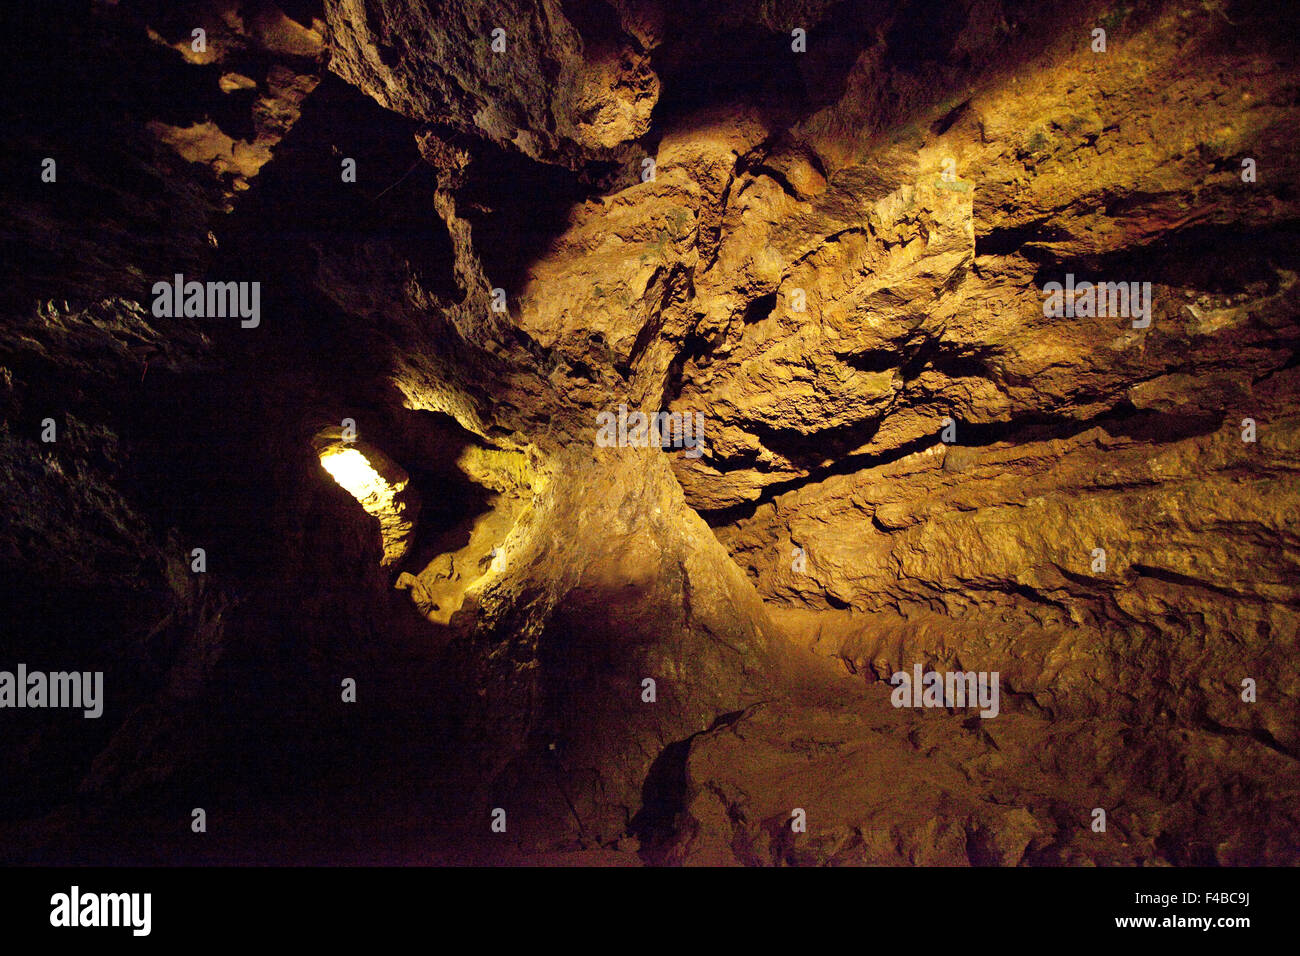 Klutert cave Schwelm, Germany. Stock Photo